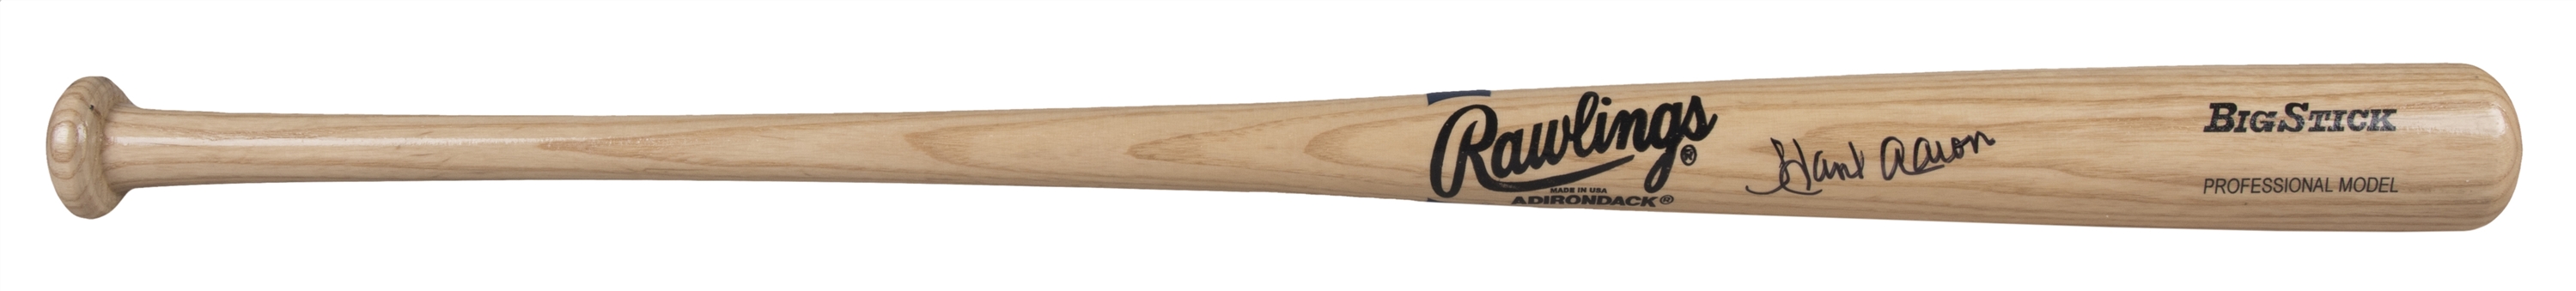 Hank Aaron Autographed Rawlings Big Stick Bat (JSA)